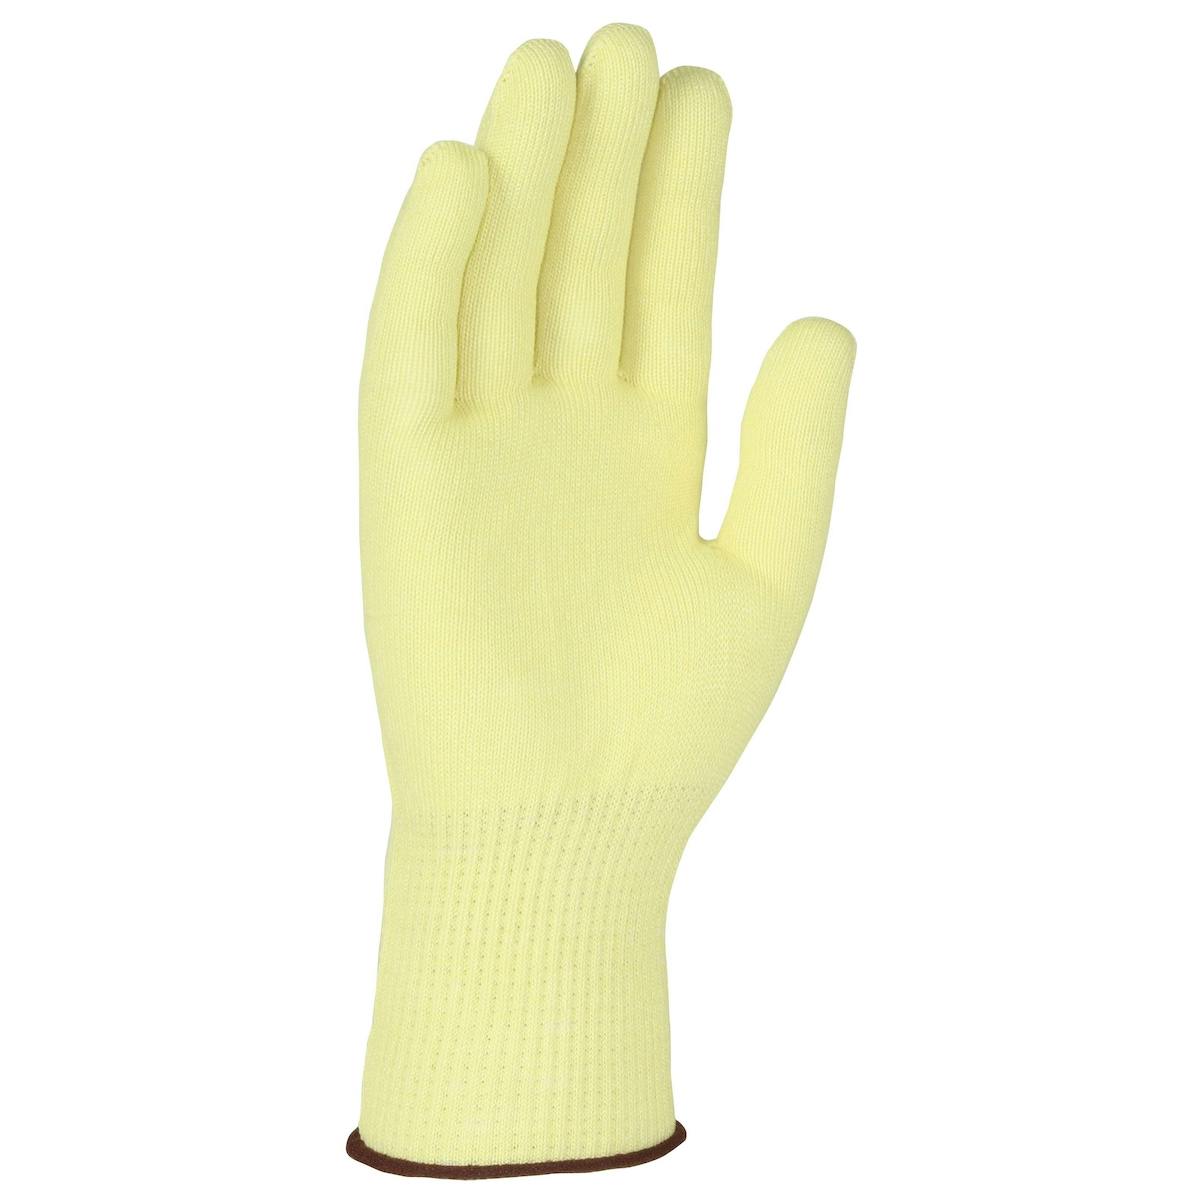 PIP® Seamless Knit ATA® / Elastane Blended Glove - Light Weight (M500)